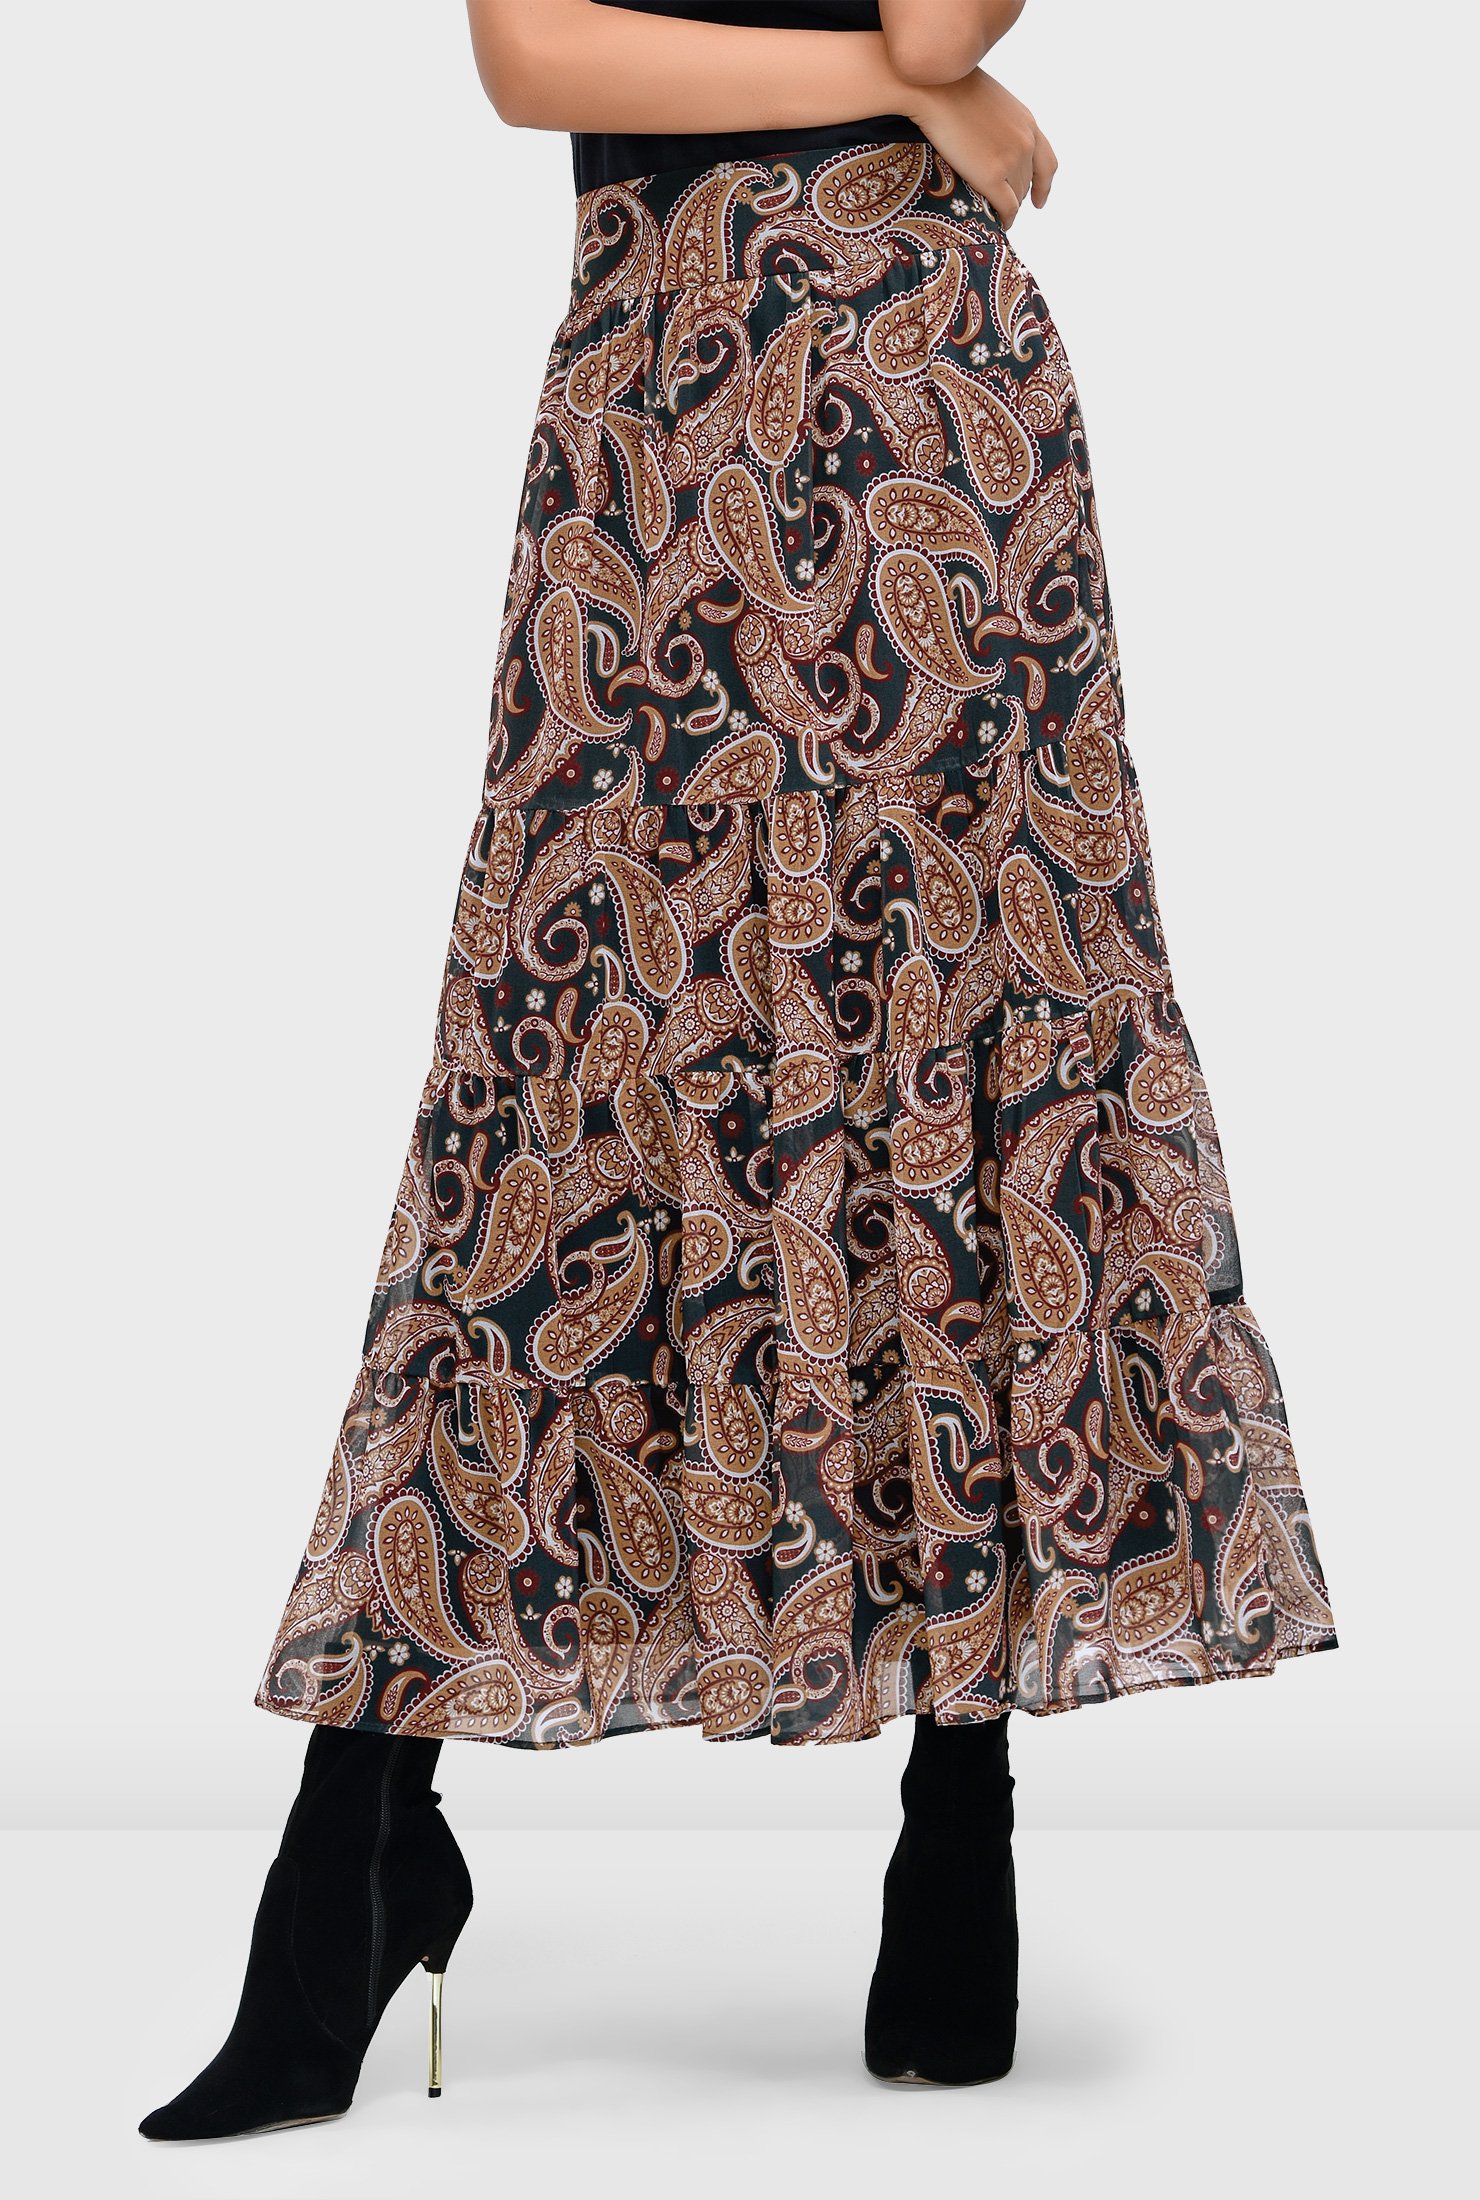 Herlipto Paisley-Print Cotton Skirt Long